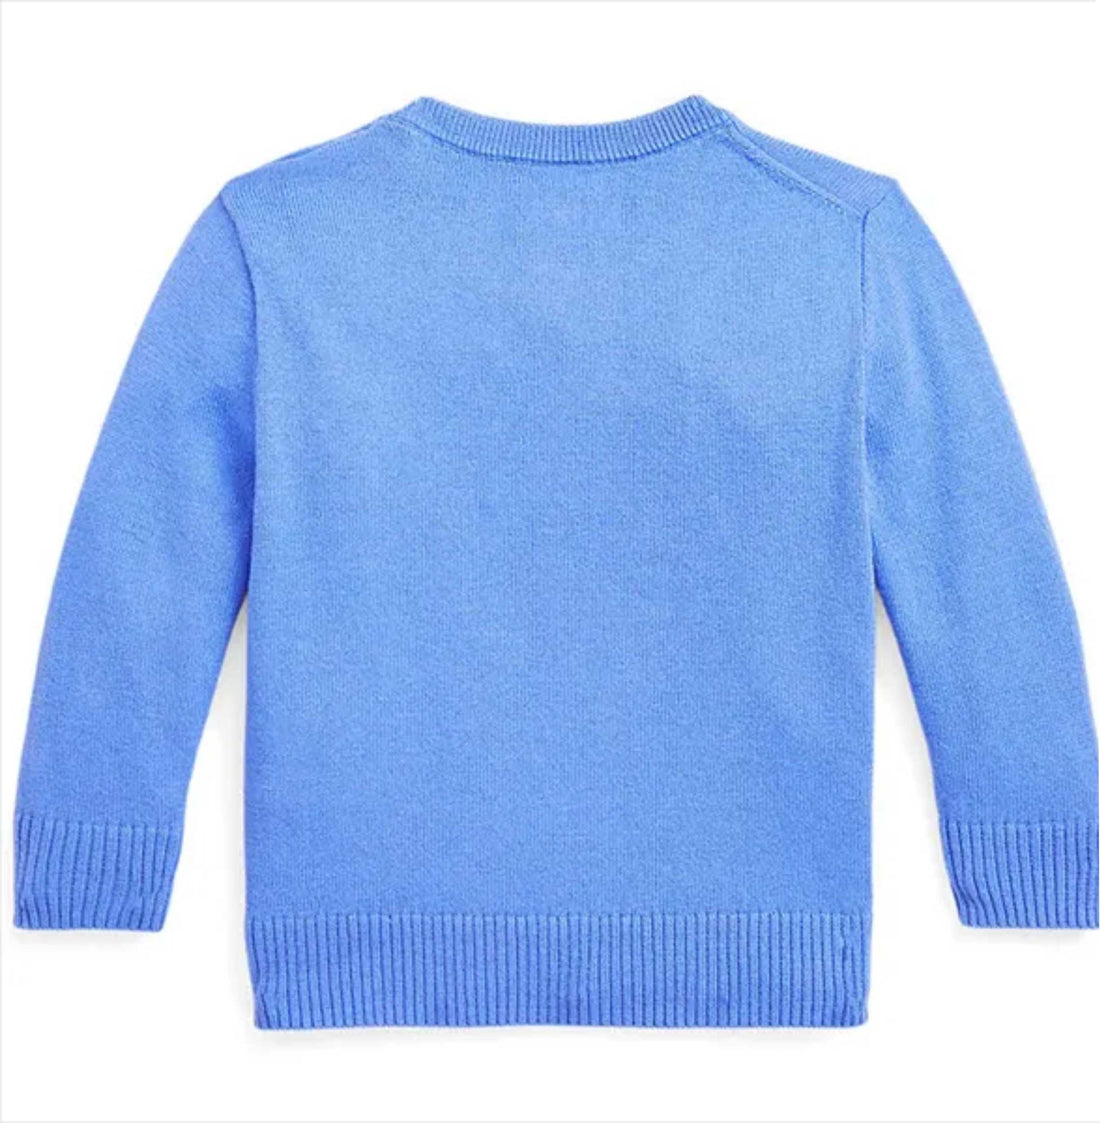 Sweater Azul Cuello Redondo Bebé Niño